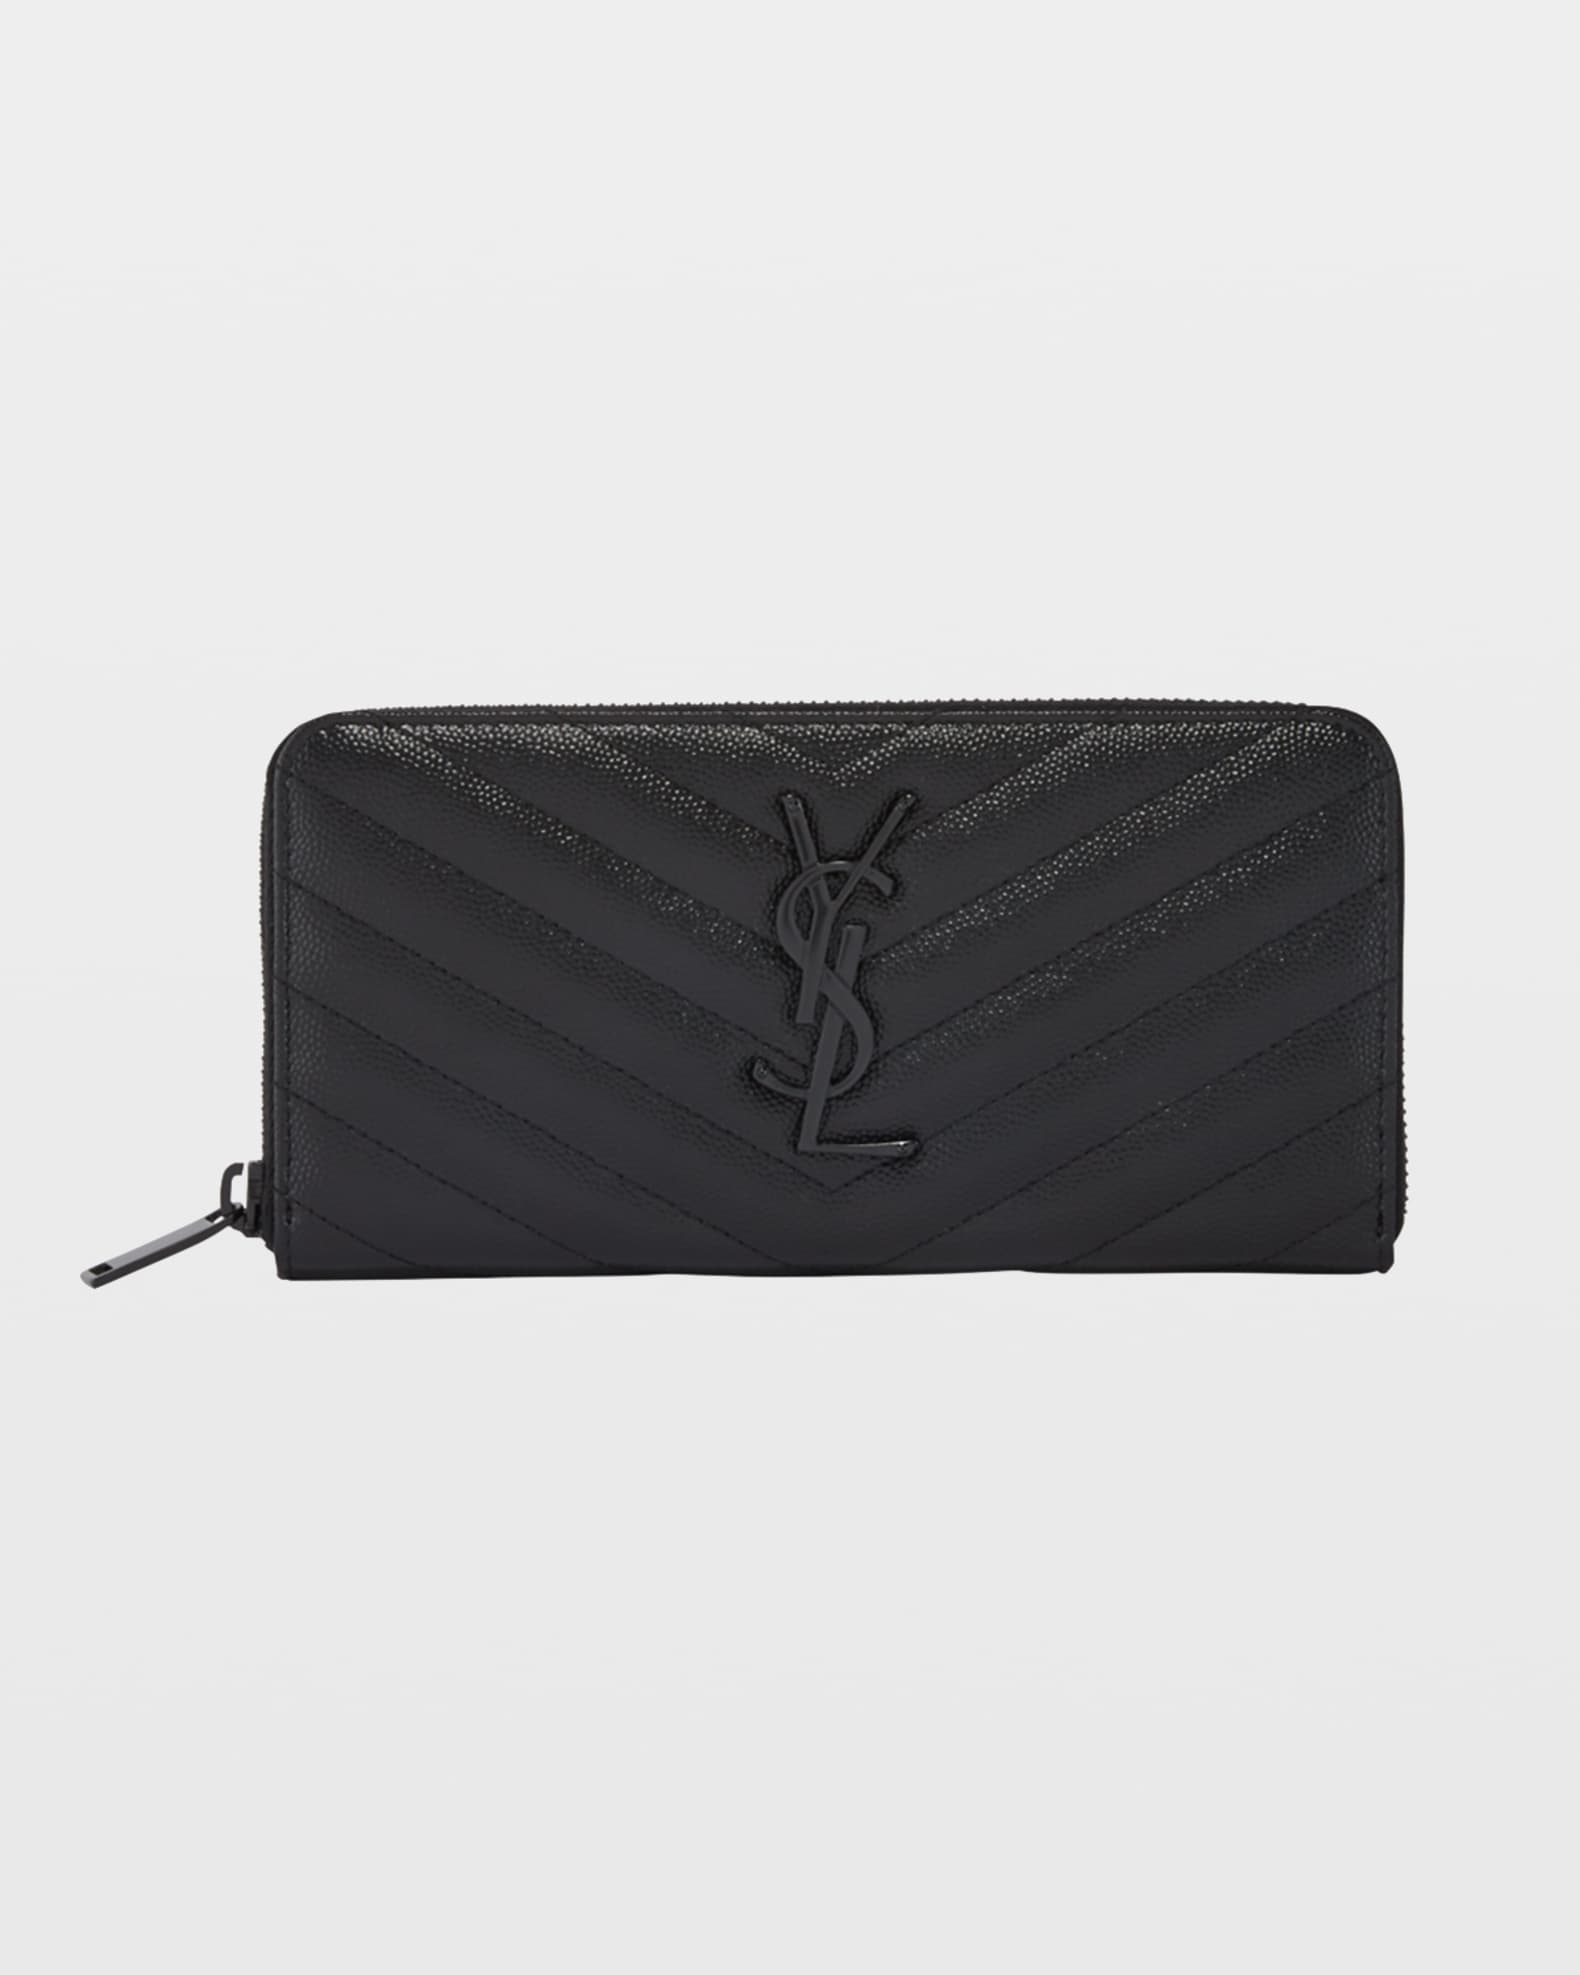 Saint Laurent Black Monogram Chevron Leather Compact Zip Around Wallet